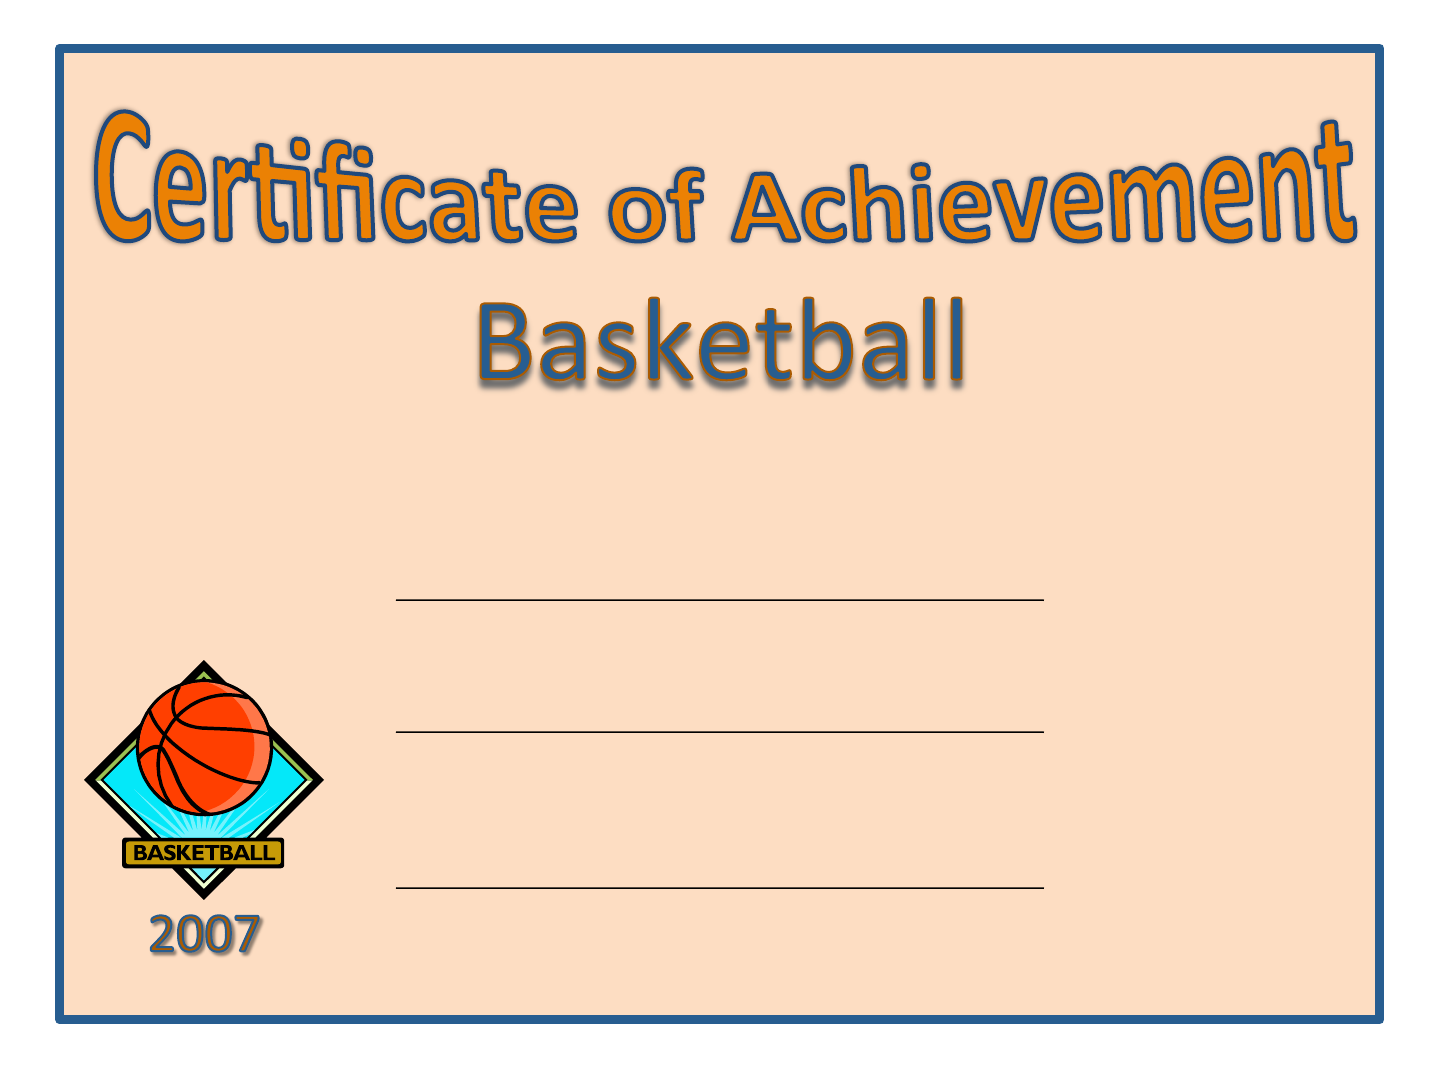 Certificate of Achievement - Basketball